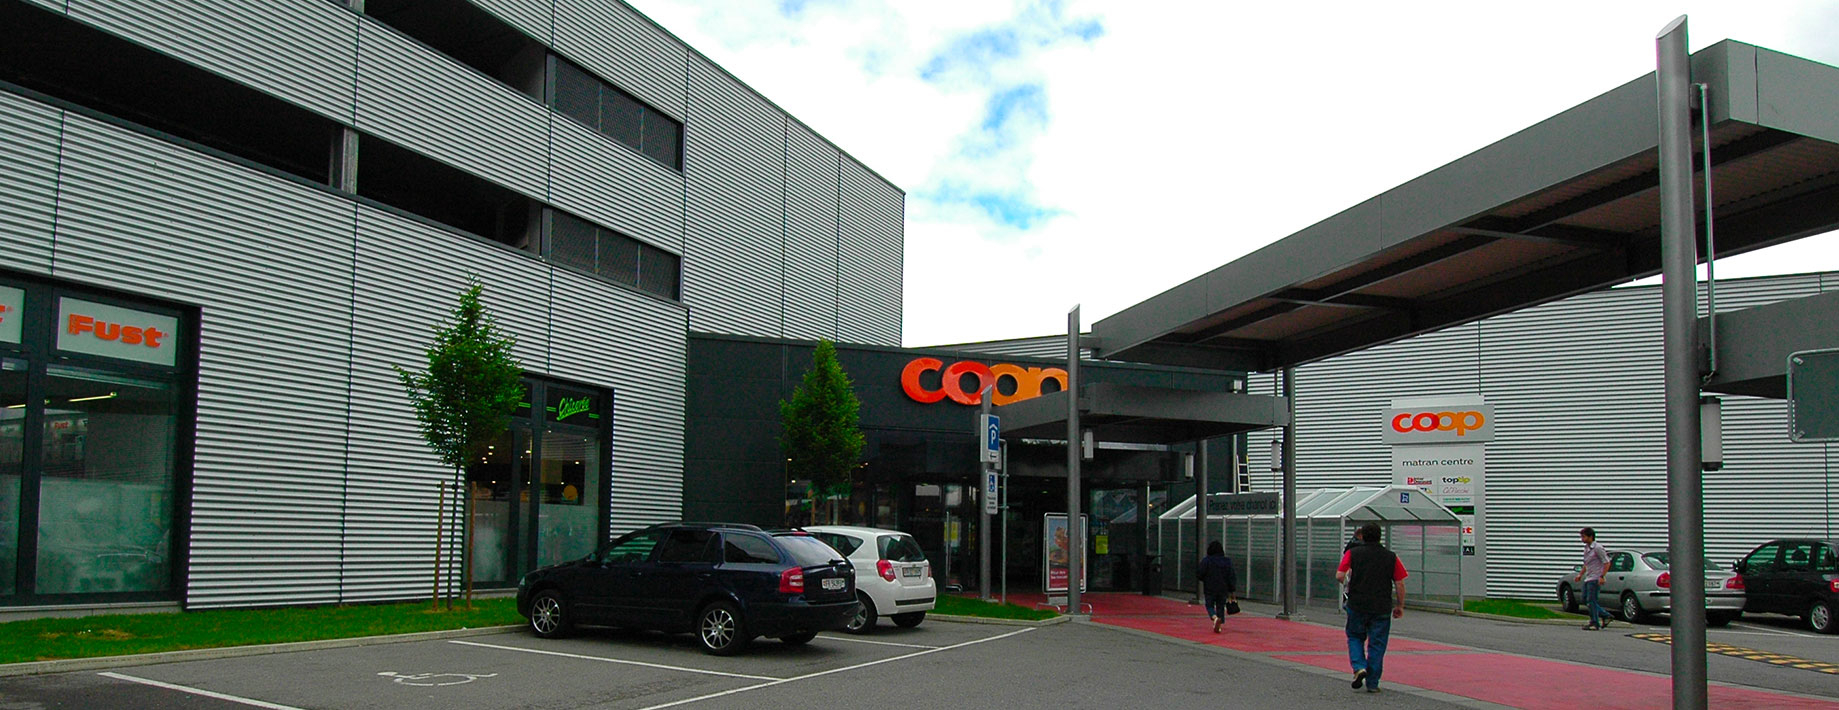 COOP Matran Centre